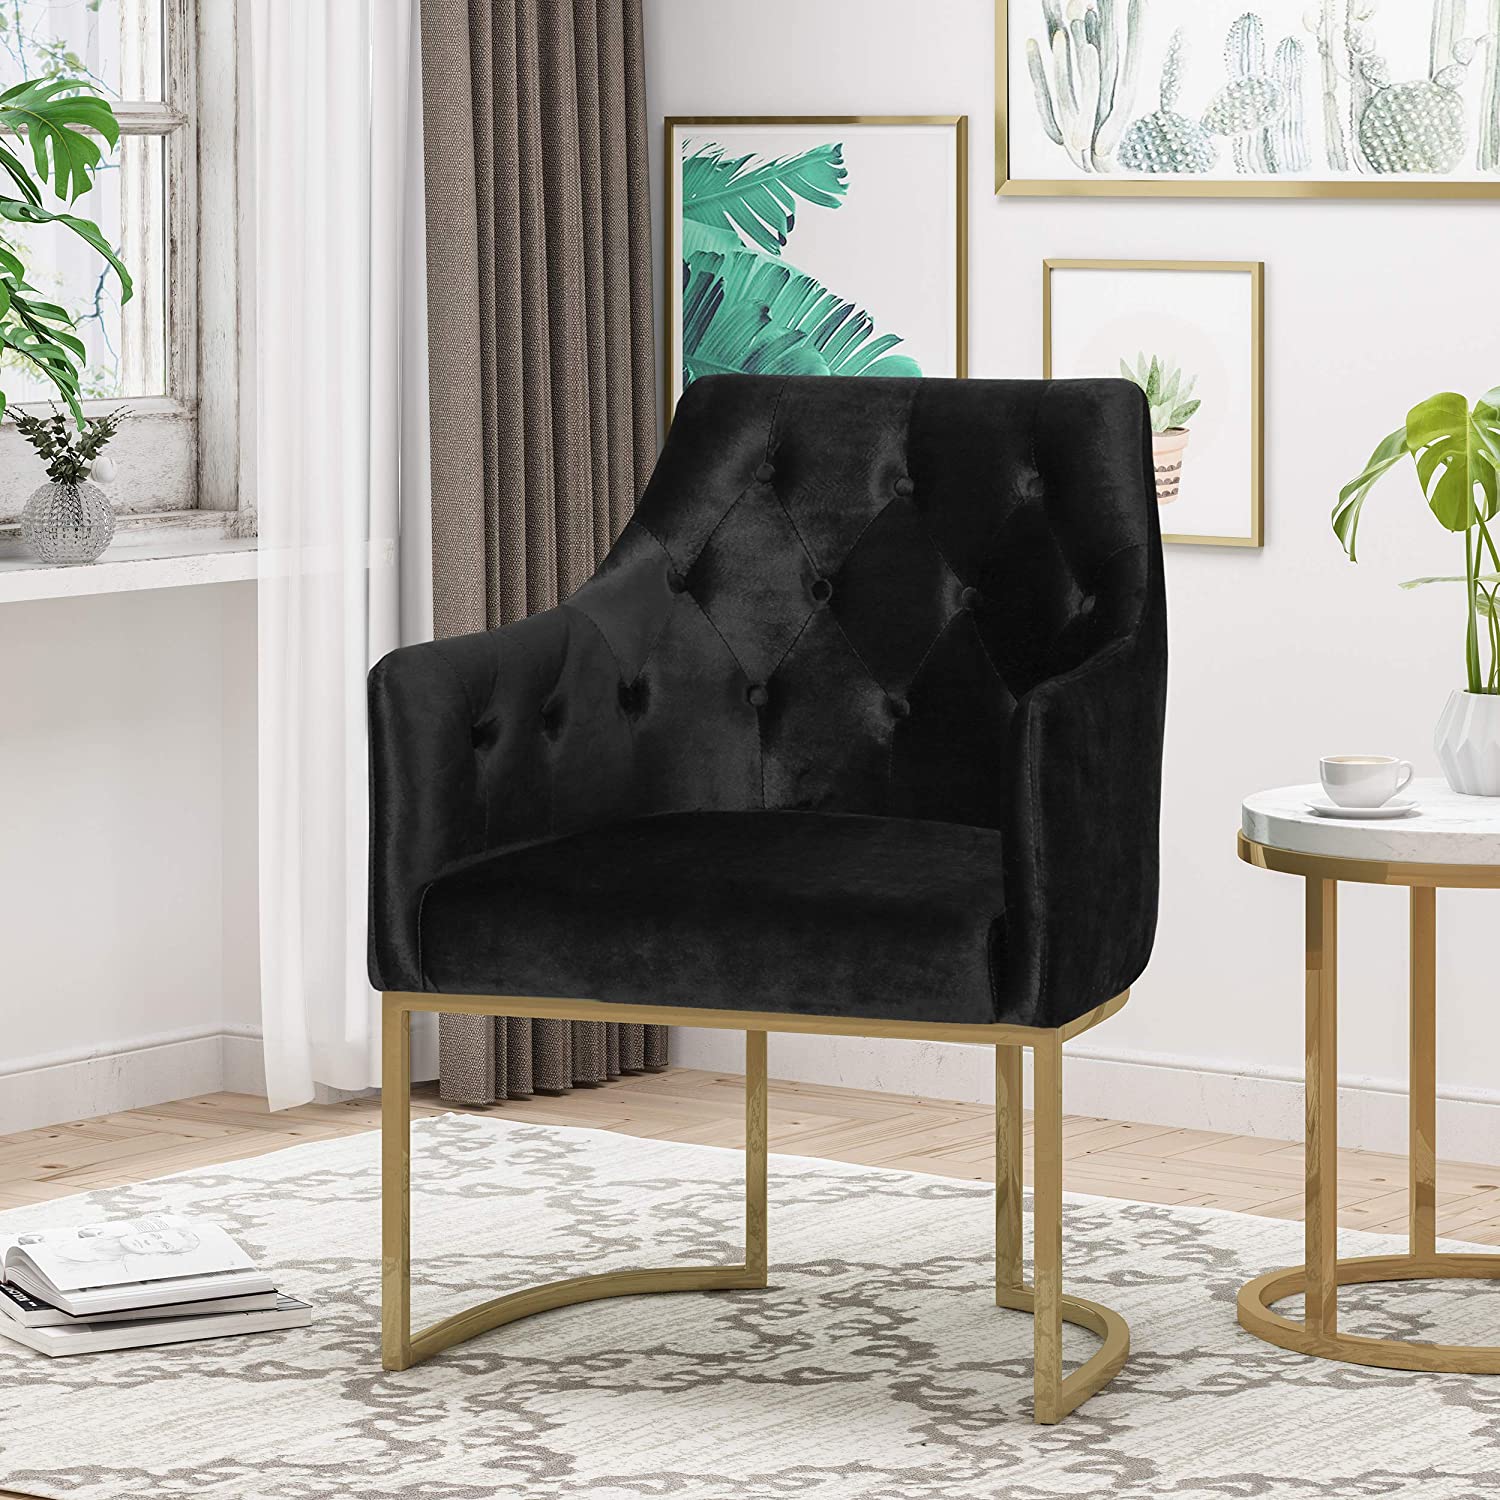 Modern Chair U-Shaped Base, Black and Gold Finish